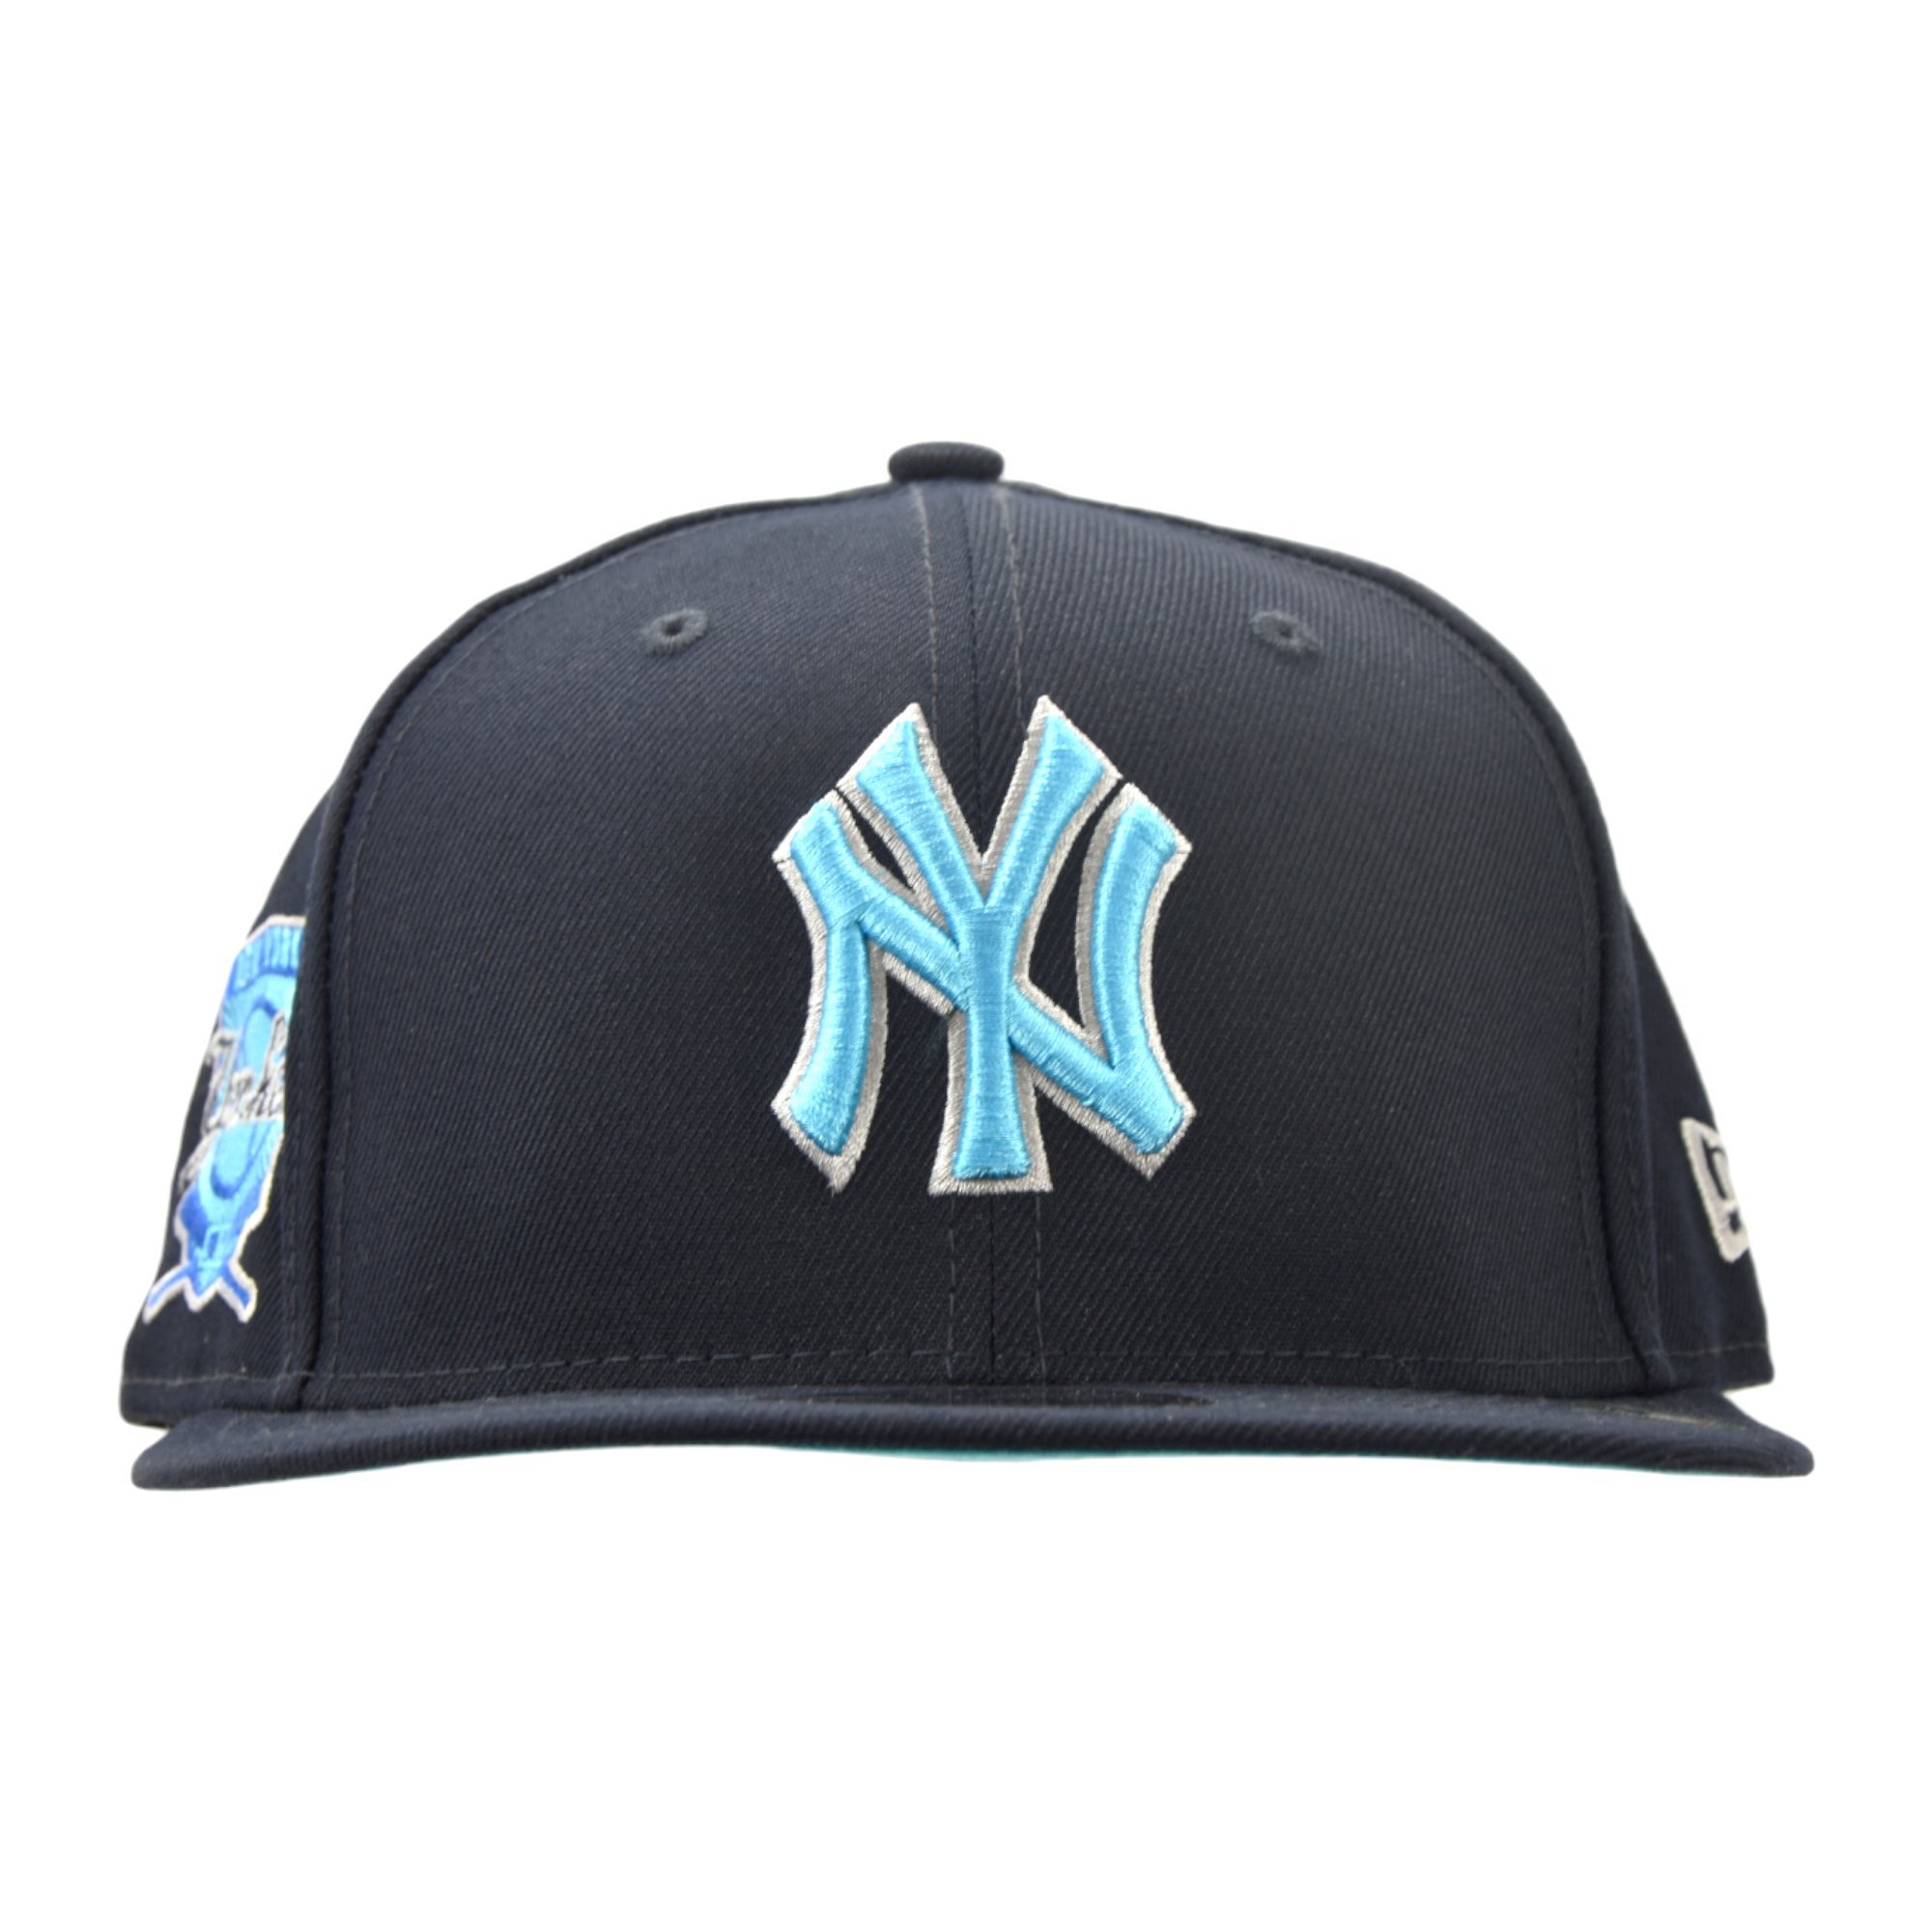 New Era Gorra ajustable 9FIFTY de los Yankees de los New York Yankees - OSFM